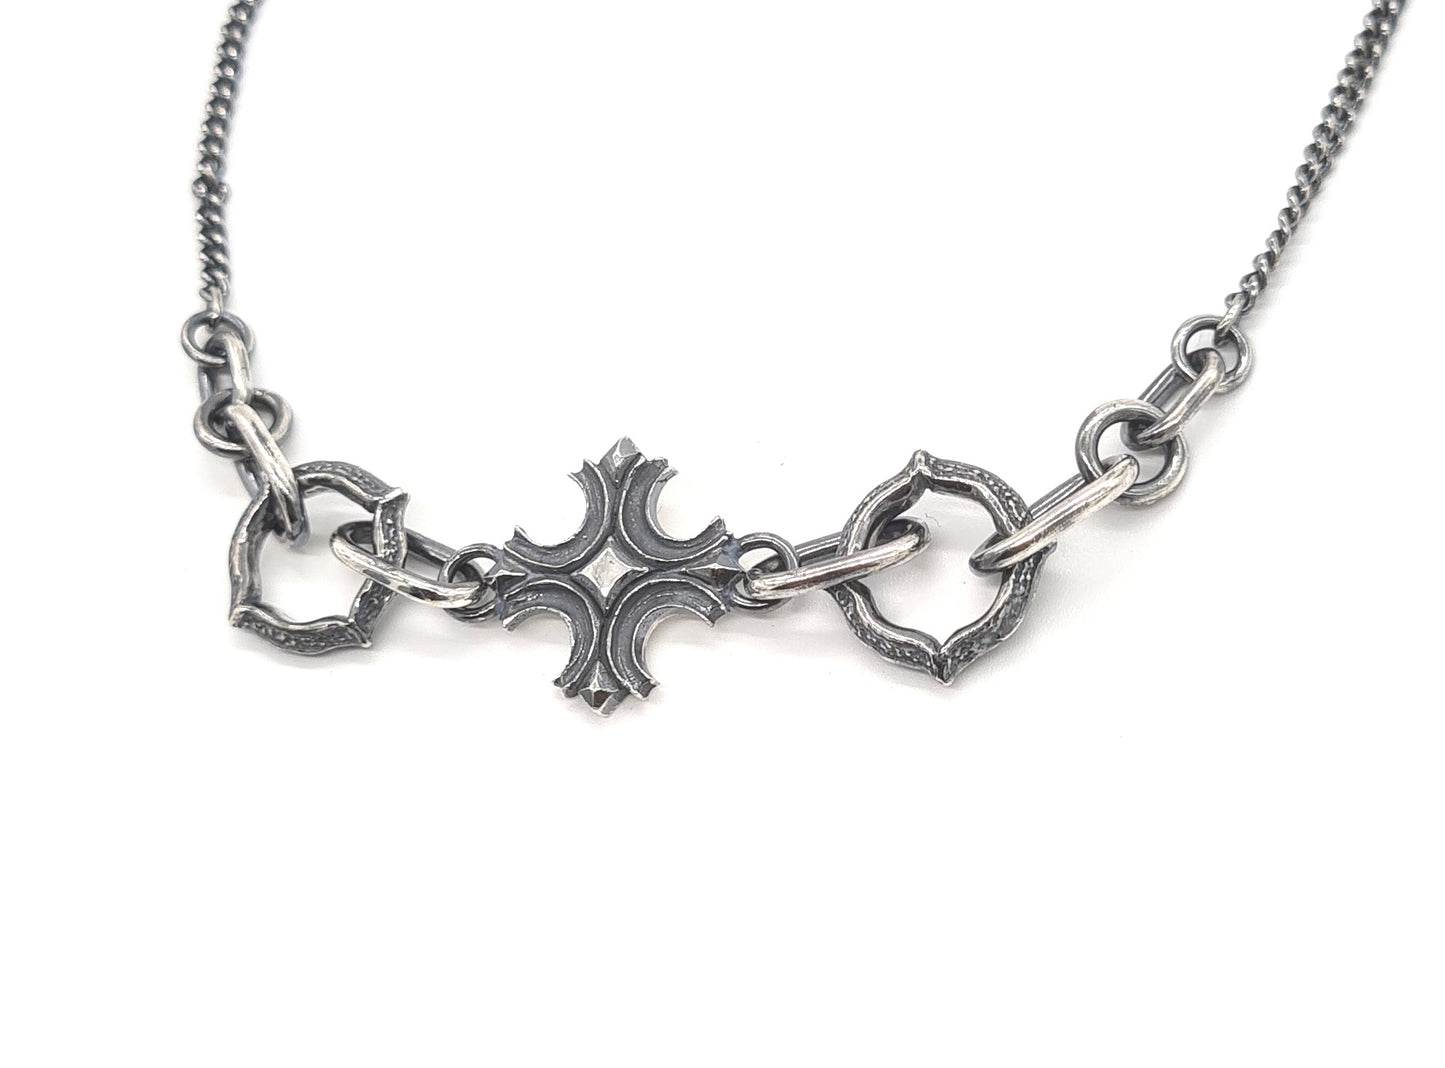 Ornate Choker Chain